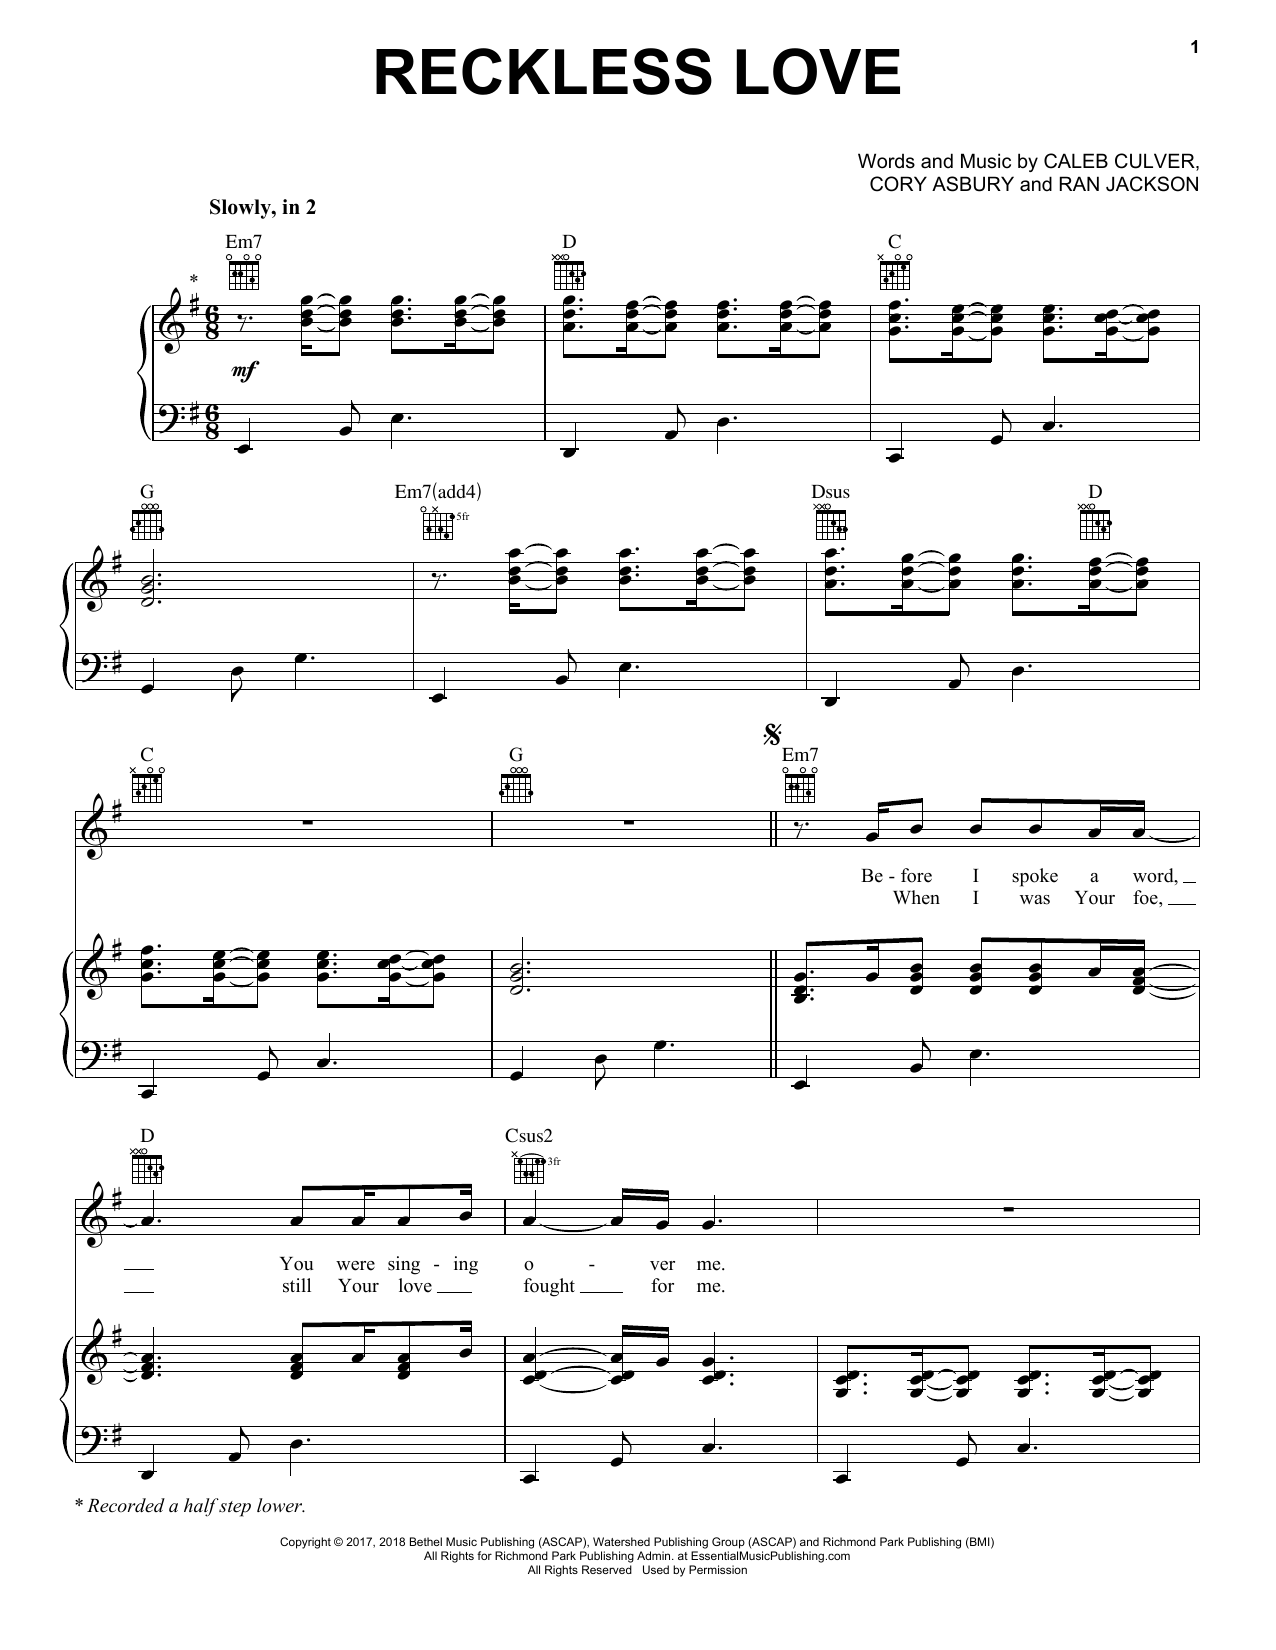 Cory Asbury Reckless Love Sheet Music Notes & Chords for Guitar Chords/Lyrics - Download or Print PDF